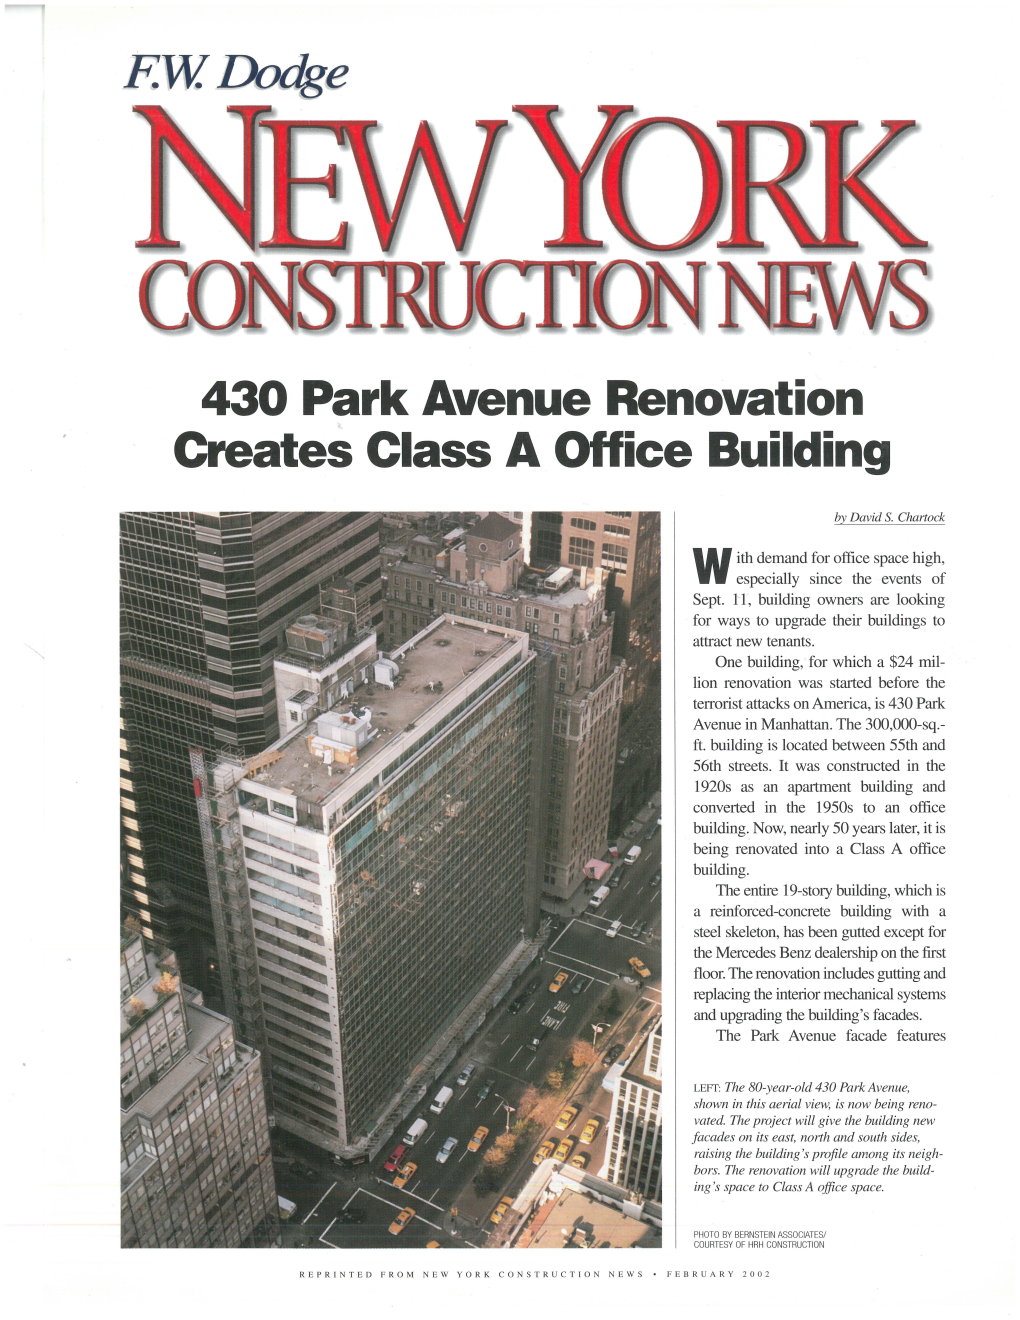 FW Dodge 430 Park Avenue Renovation Creates Class a Office Building